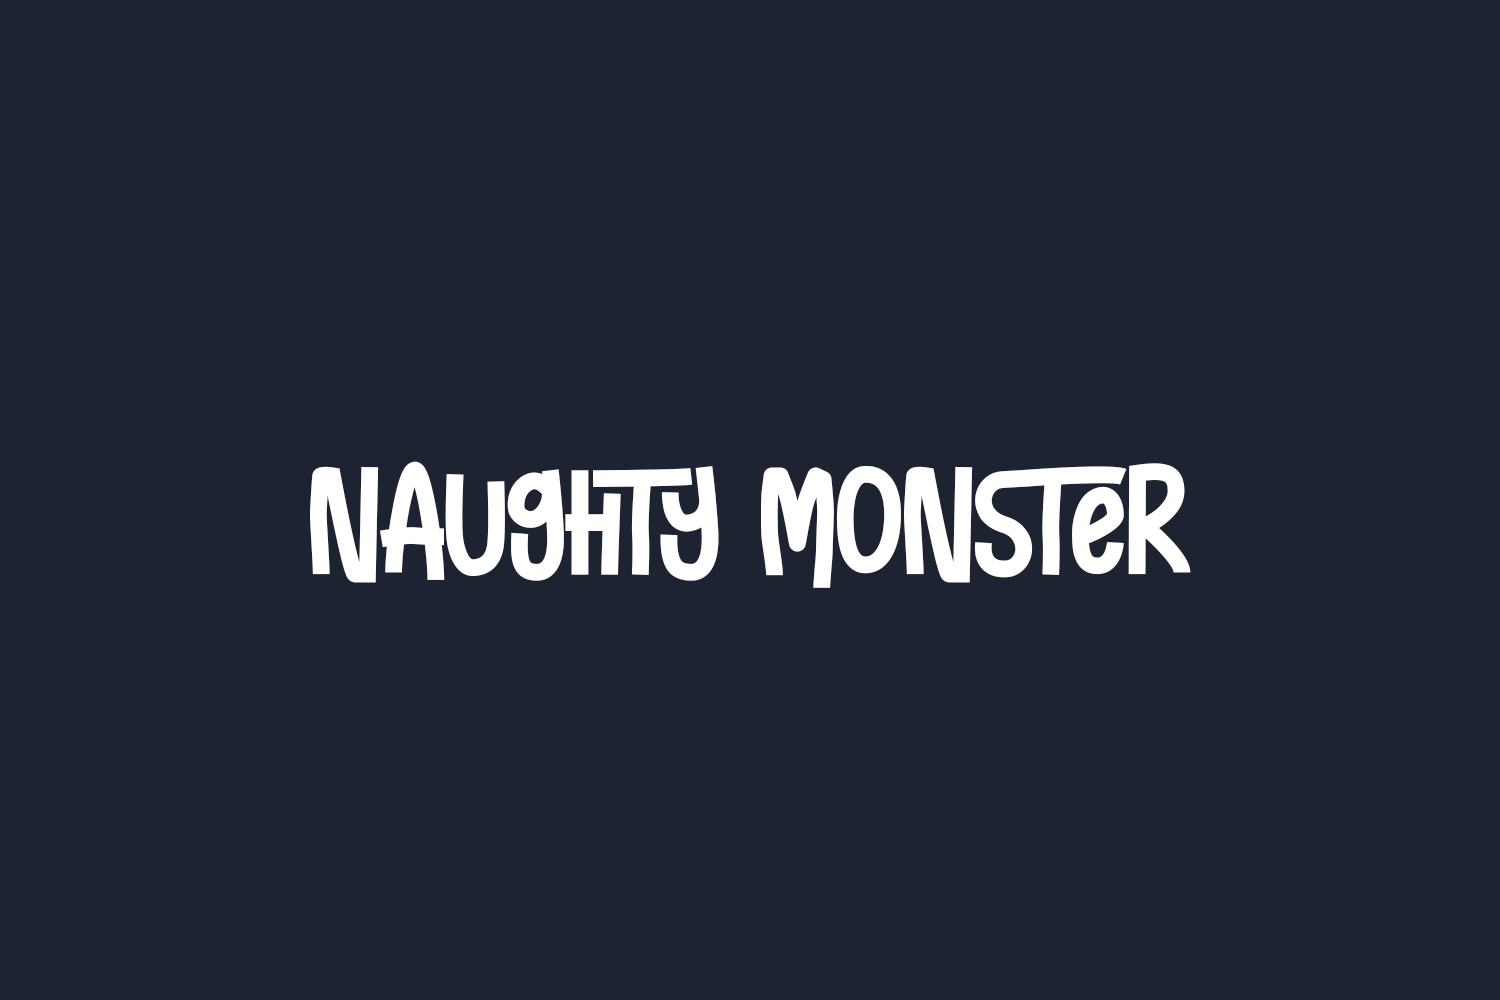 Naughty Monster Free Font